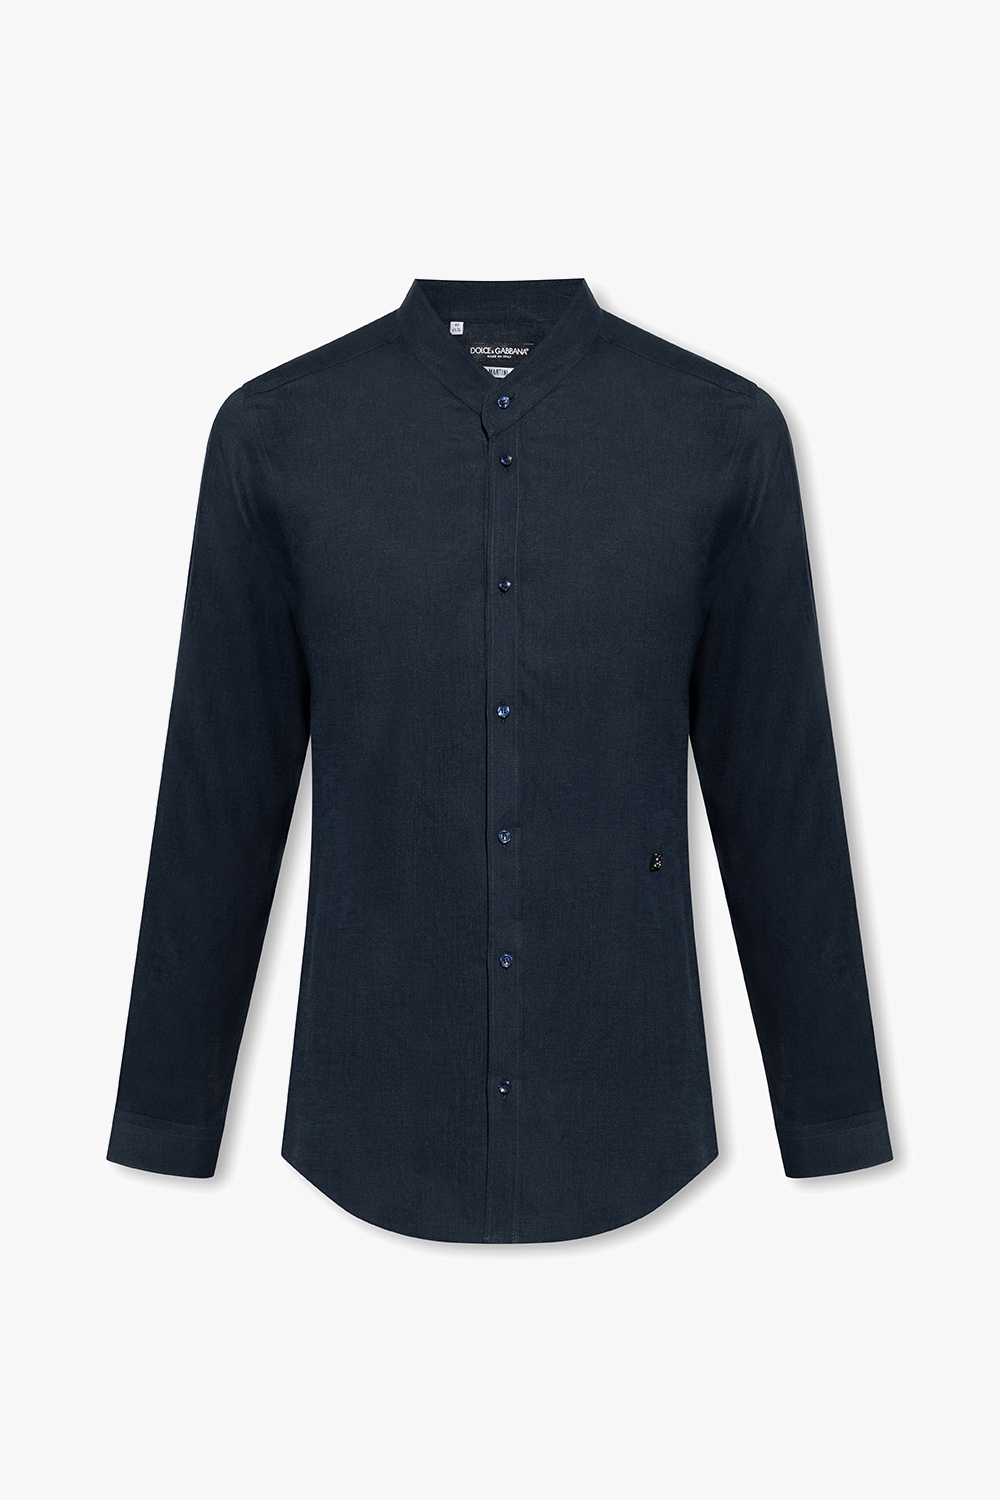 Dolce & Gabbana Linen shirt with standing collar | Men's Clothing